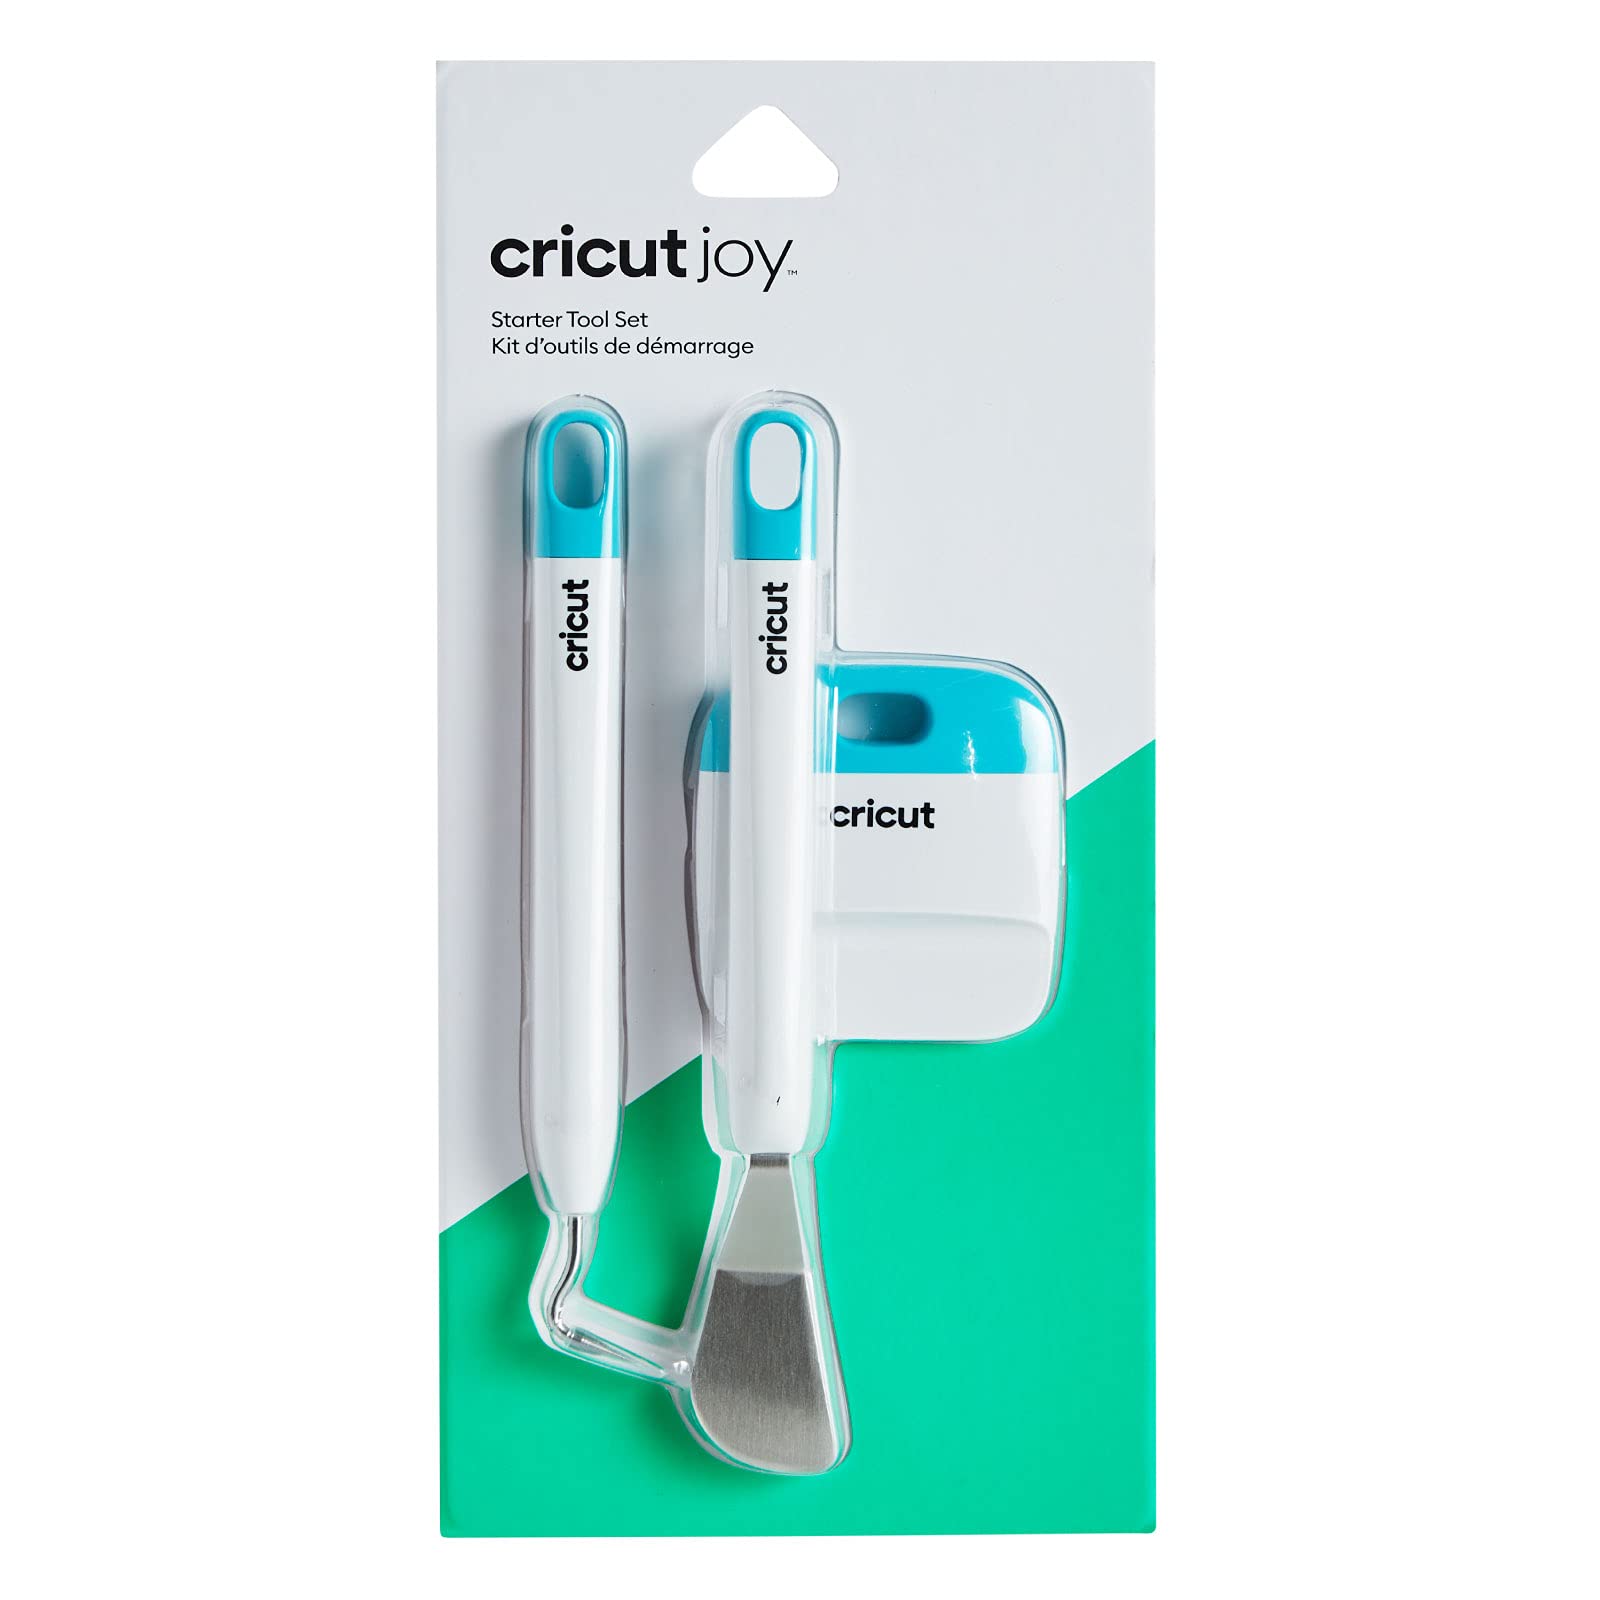 3-Piece Cricut Joy Starter Tool Kit $4.79, 6-Piece Cricut Basic Tool Set (Core Colors) $11.24 + Free Shipping w/ Prime or on $35+